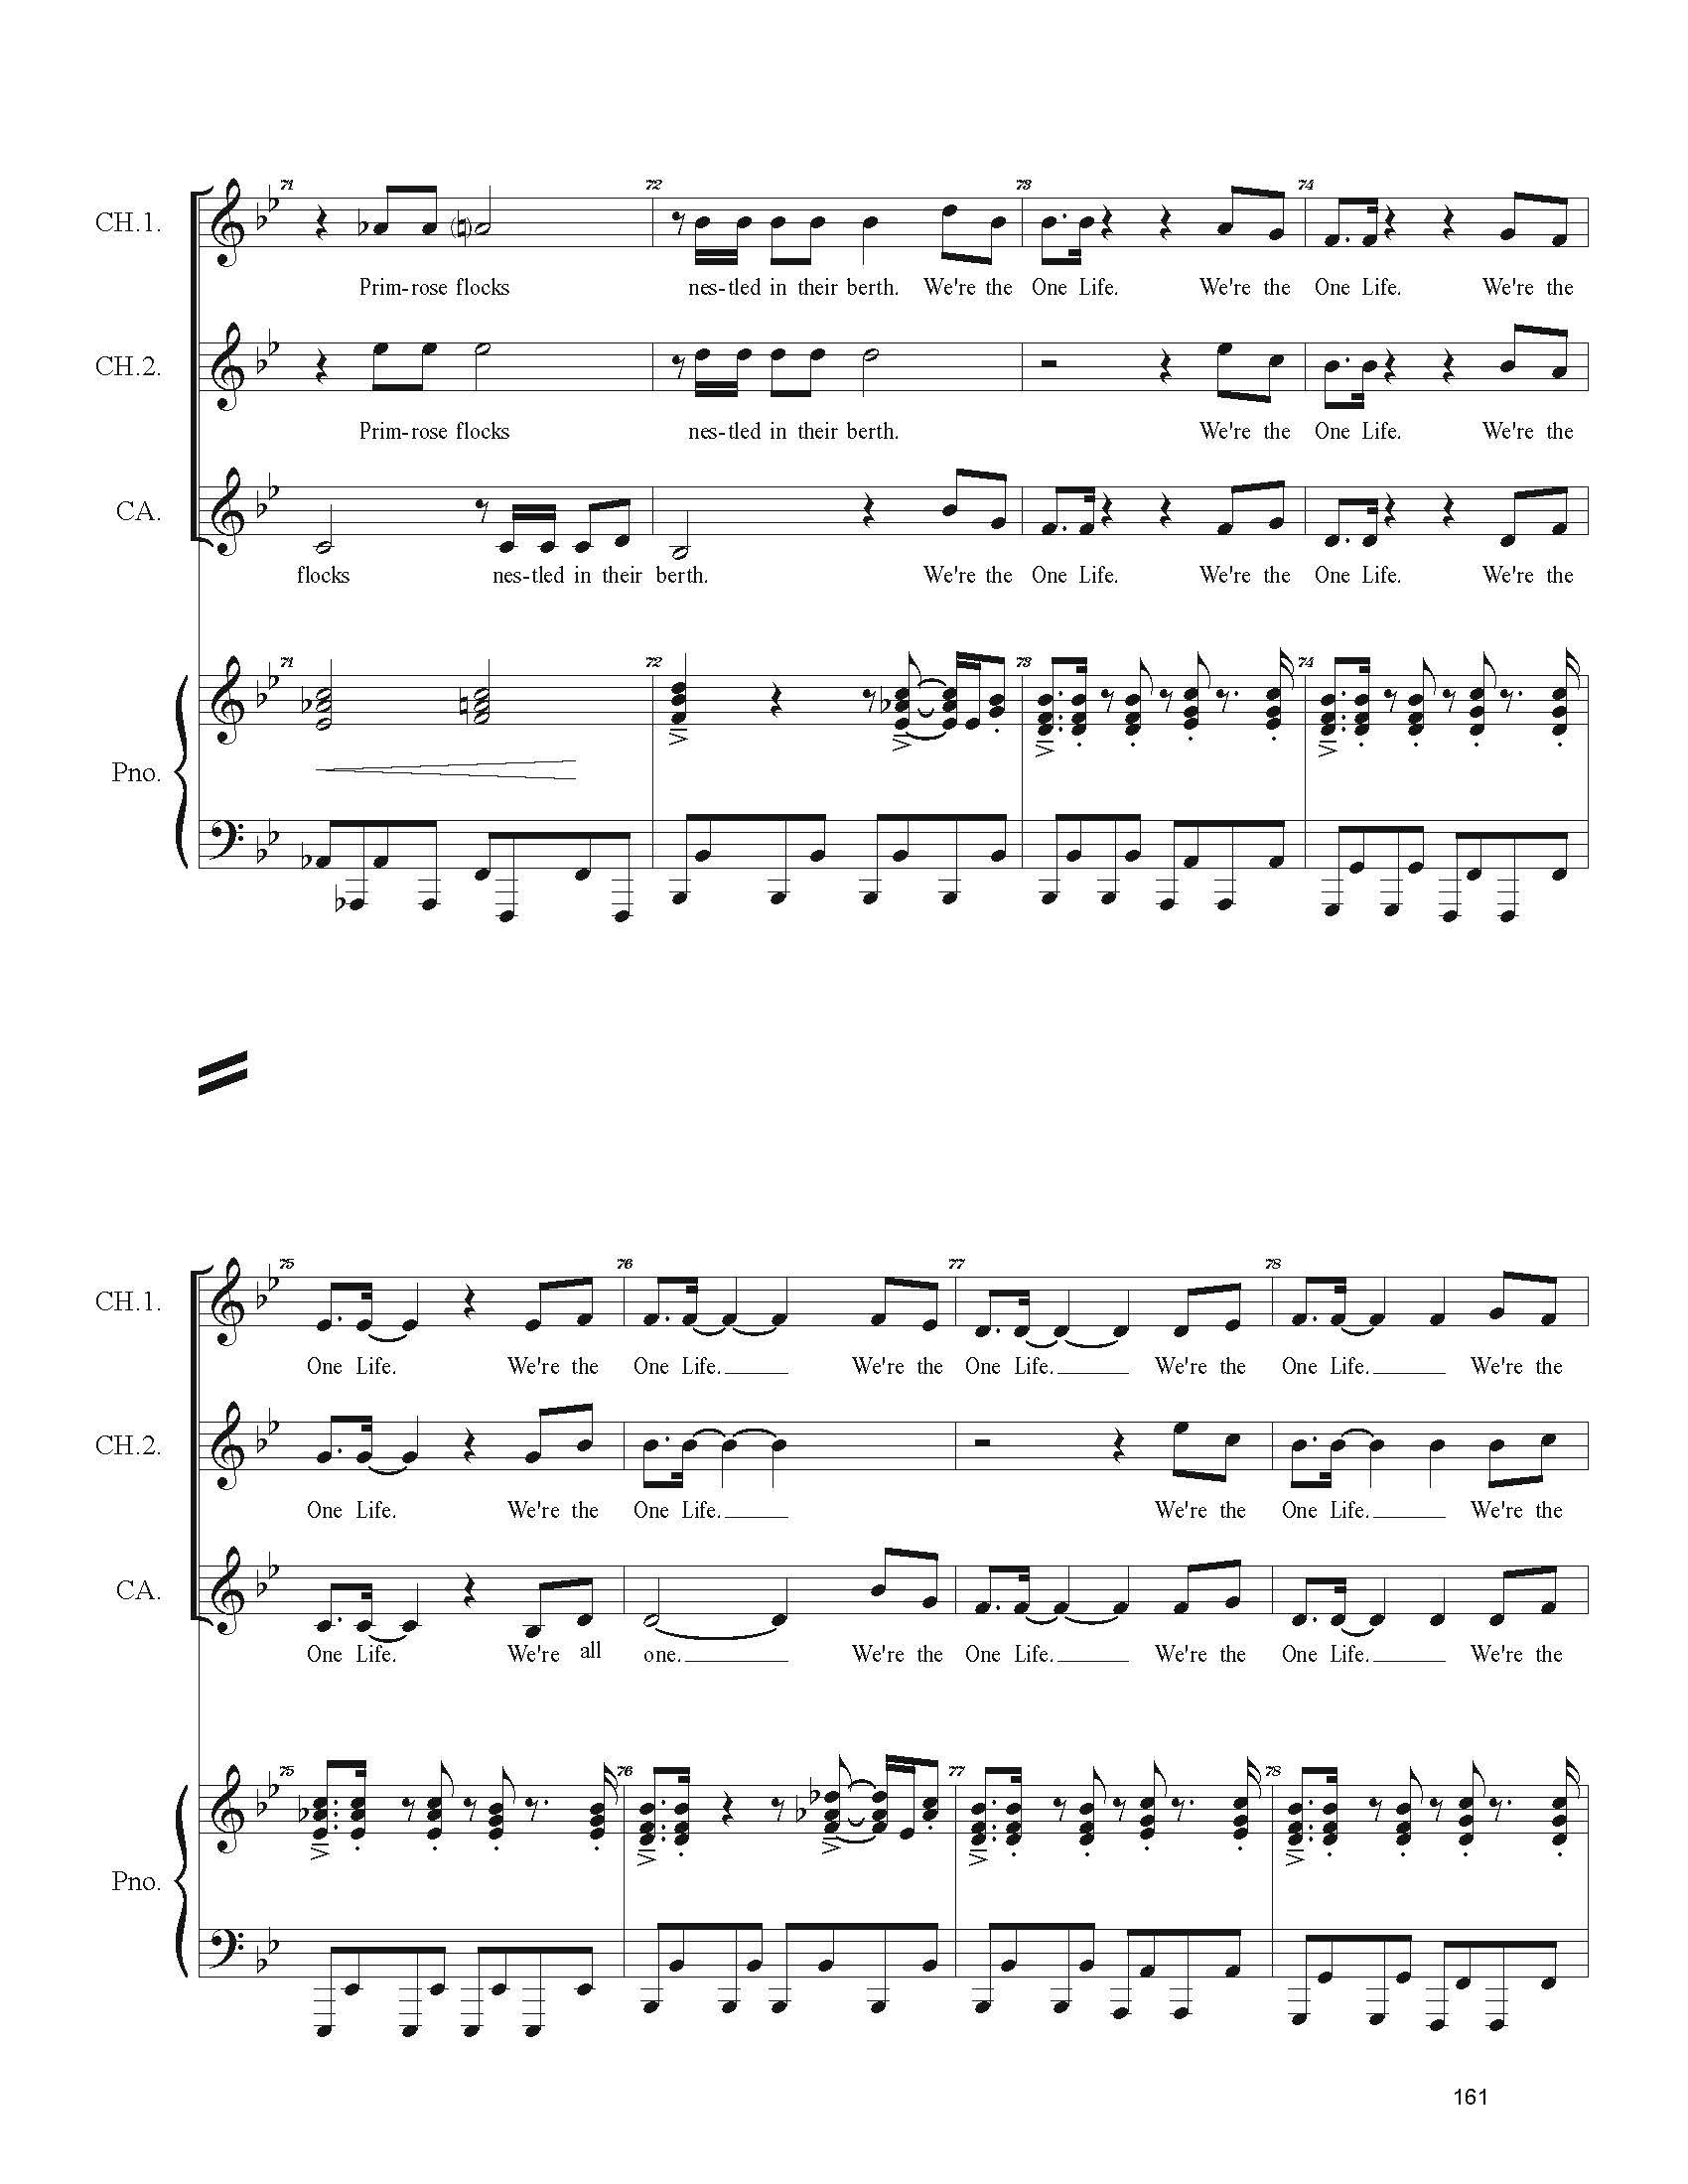 FULL PIANO VOCAL SCORE DRAFT 1 - Score_Page_161.jpg